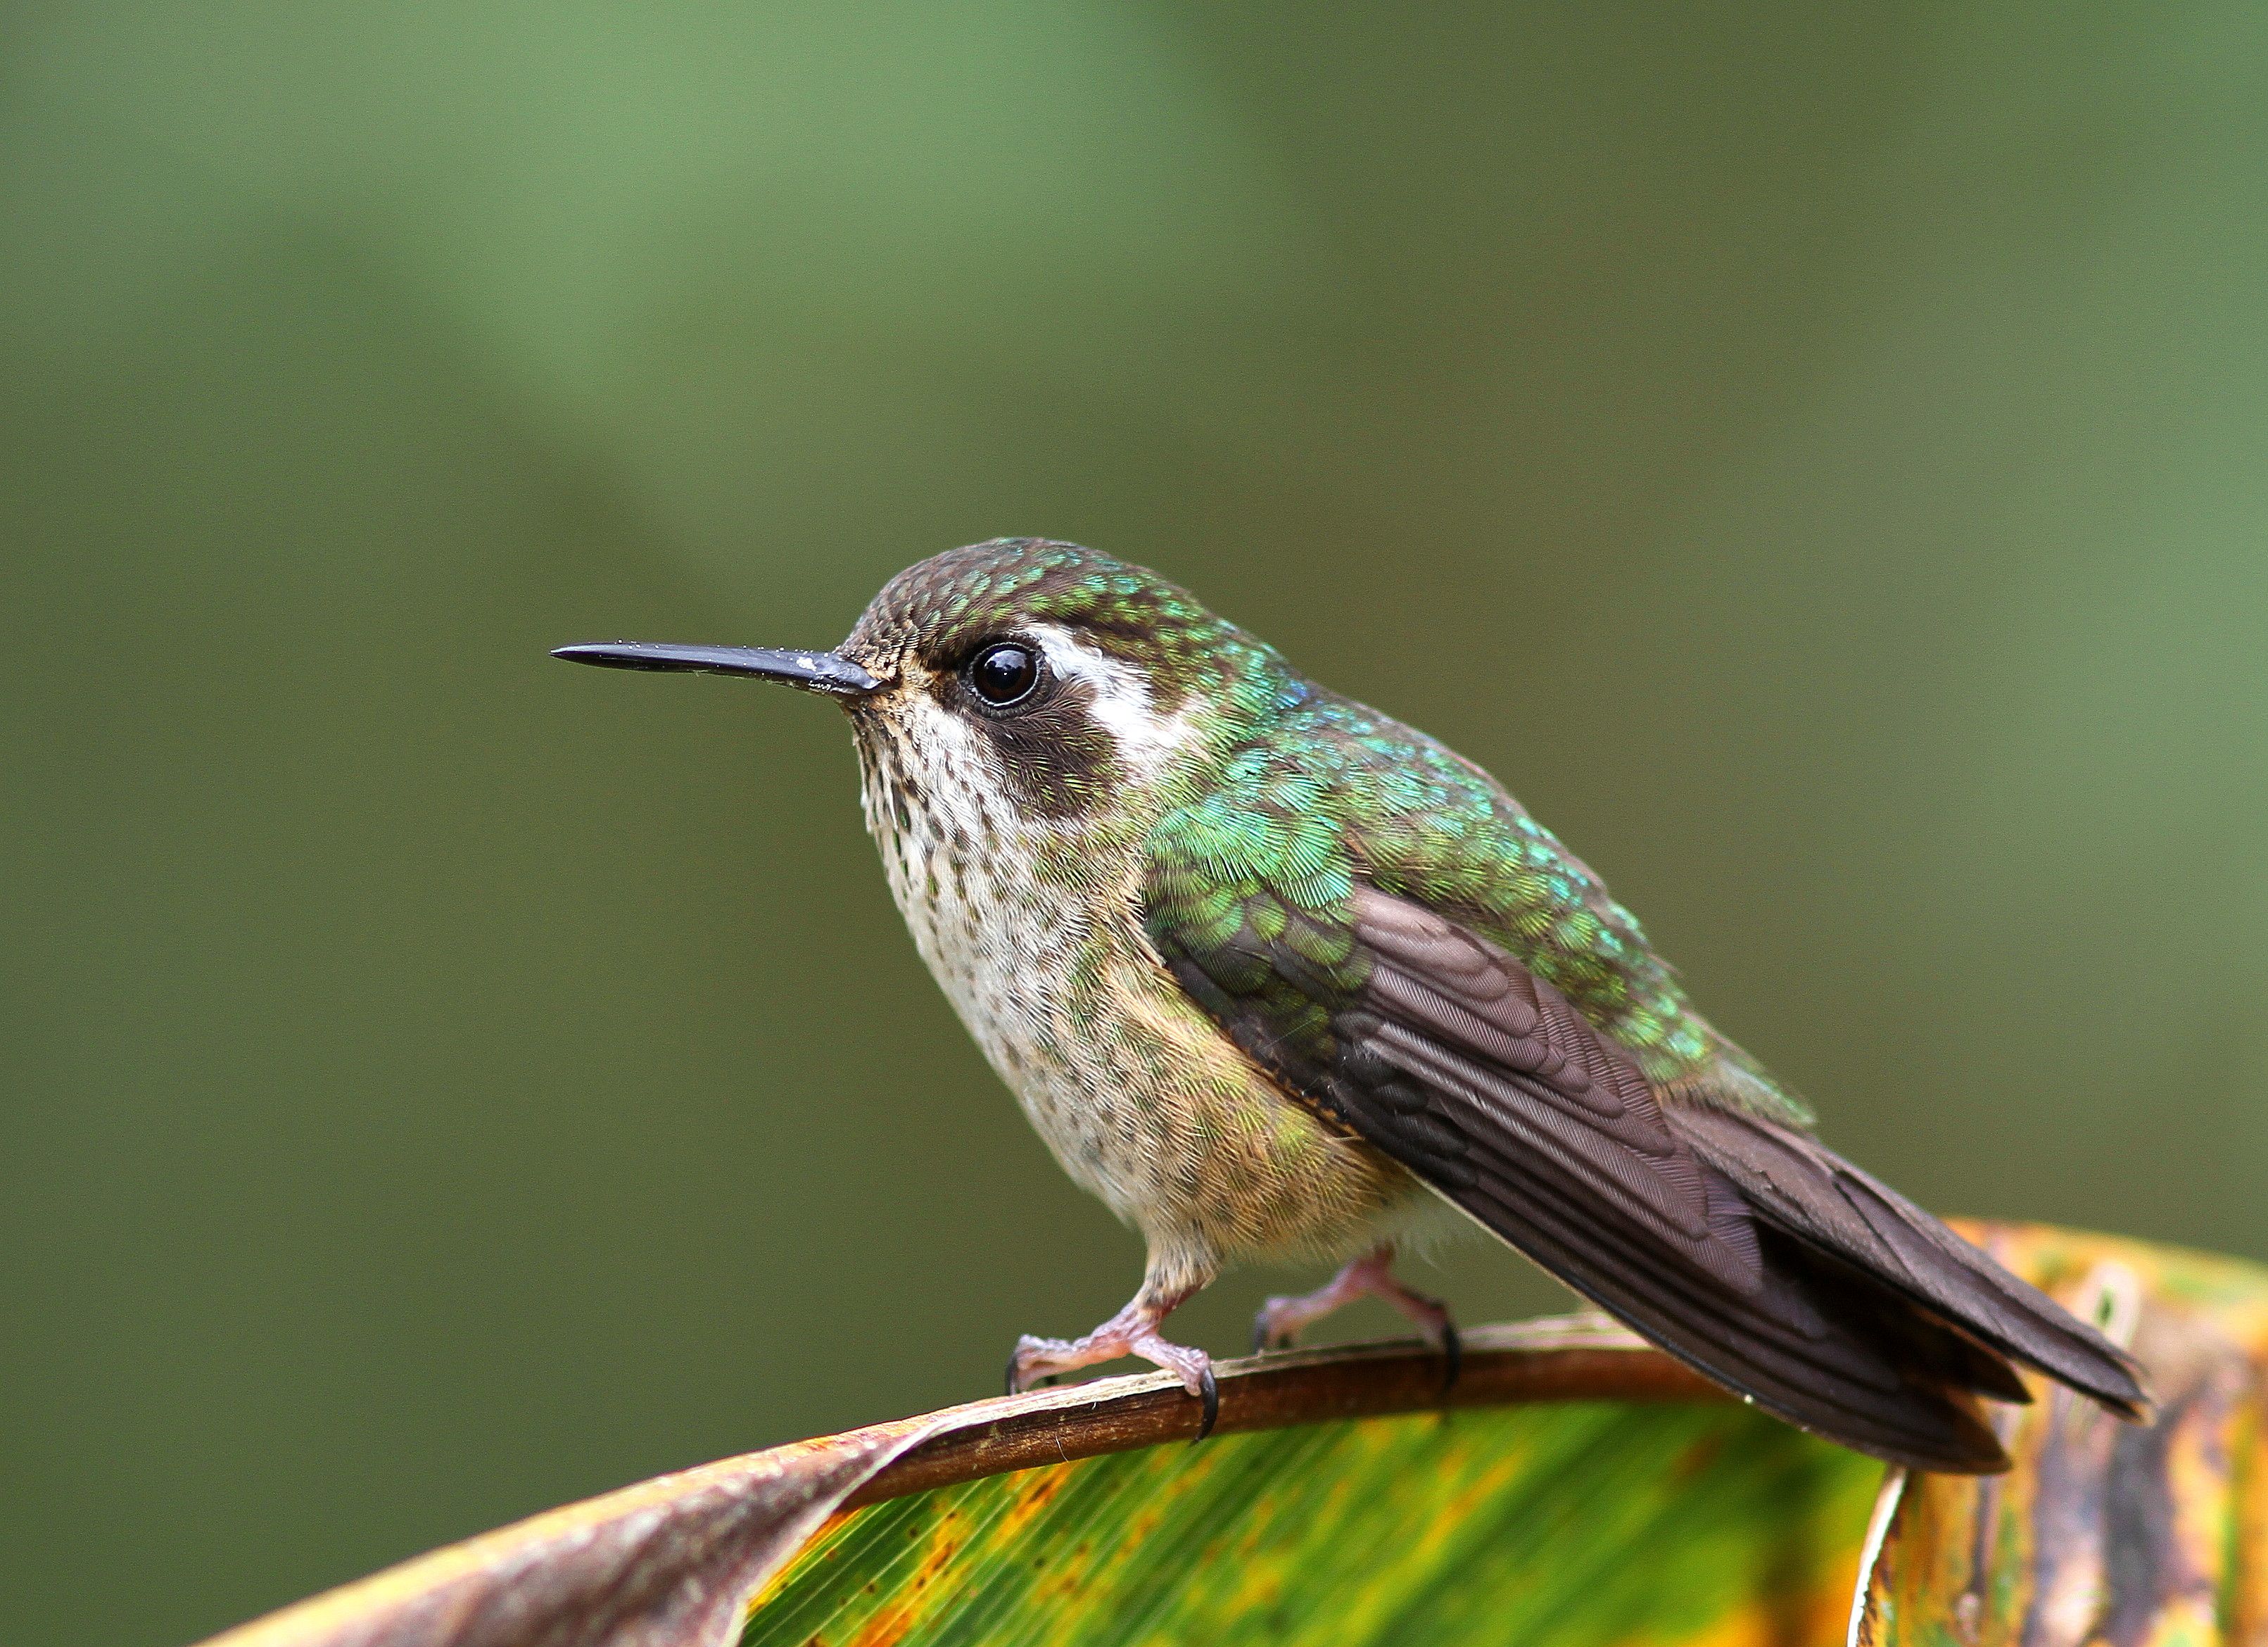 Speckled hummingbird | Linda | Pinterest | Hummingbird